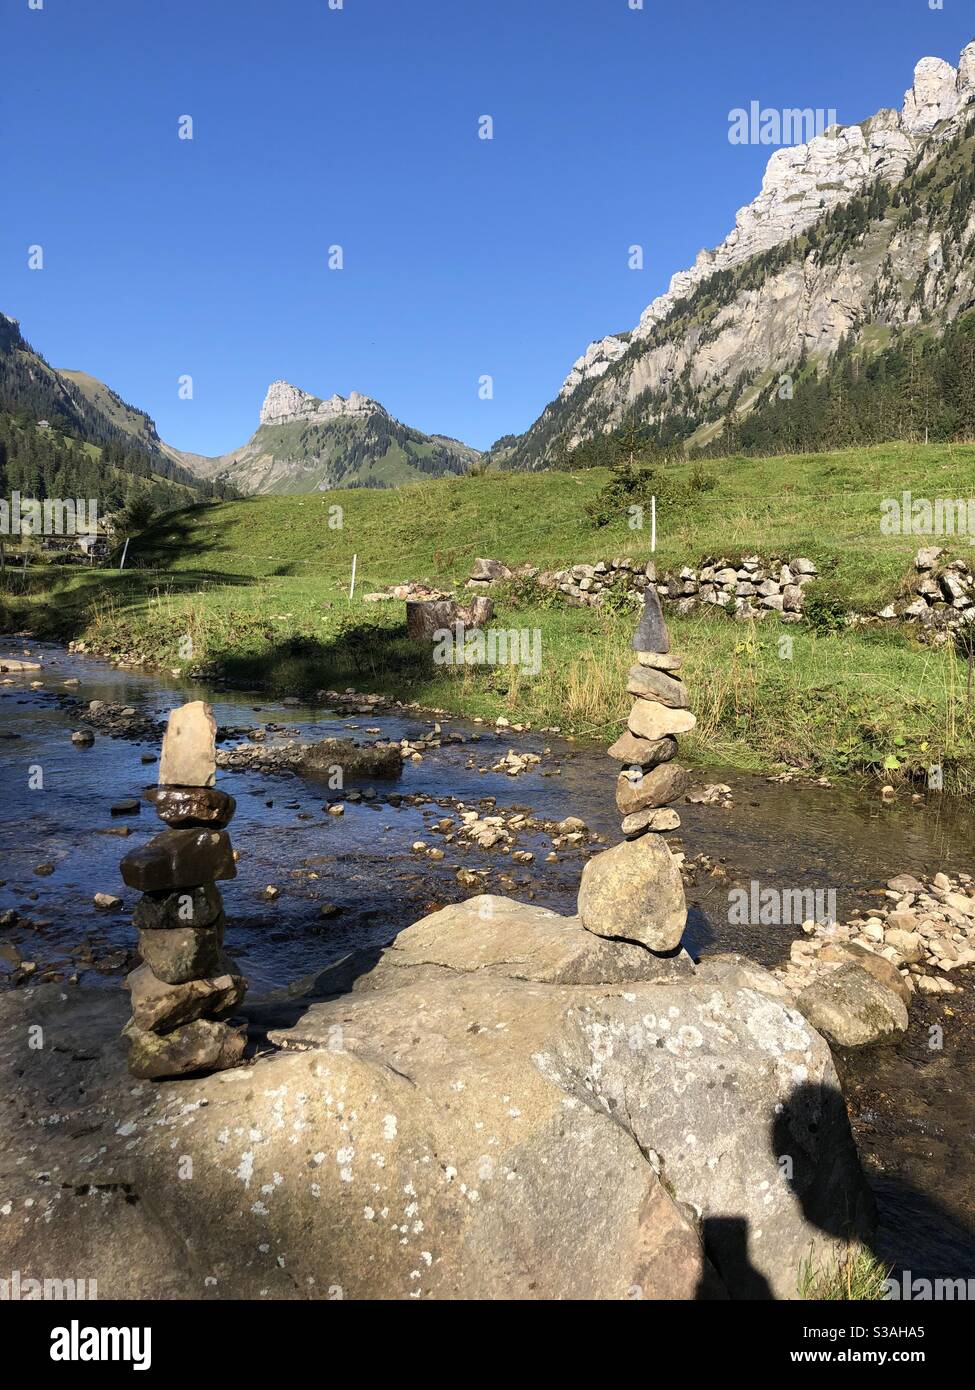 Beauty of a Swiss nature. Stock Photo